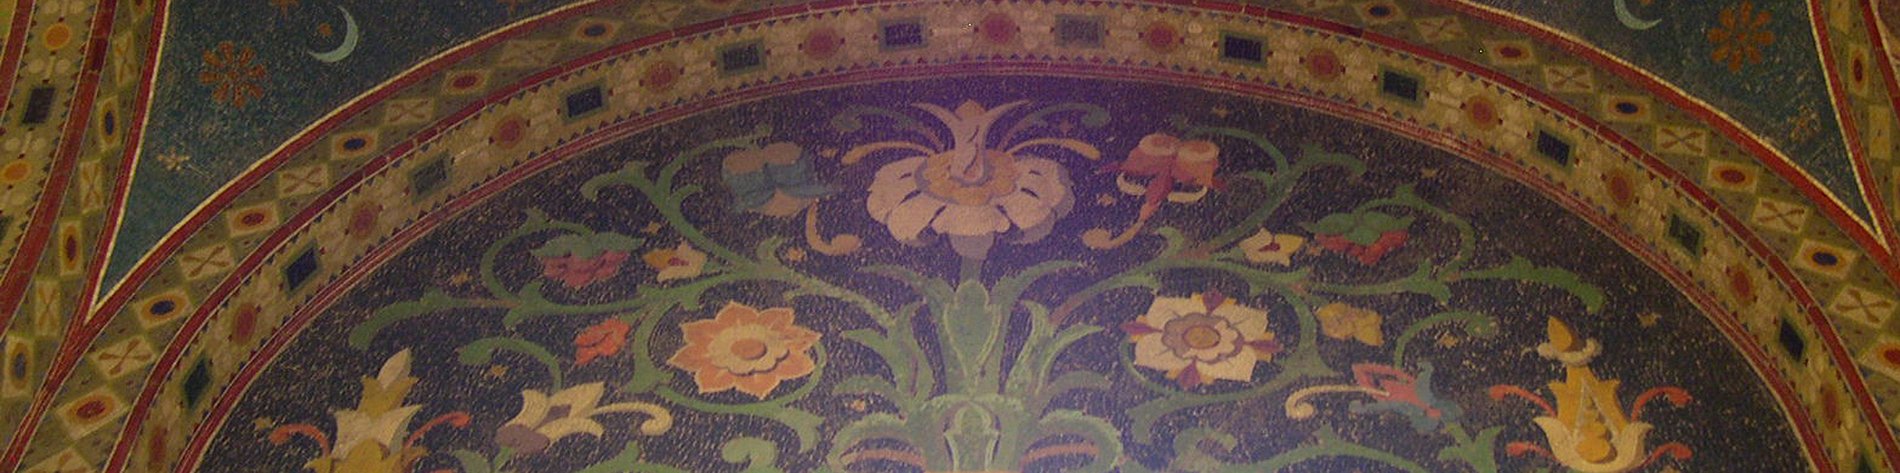 photo of a mosaic